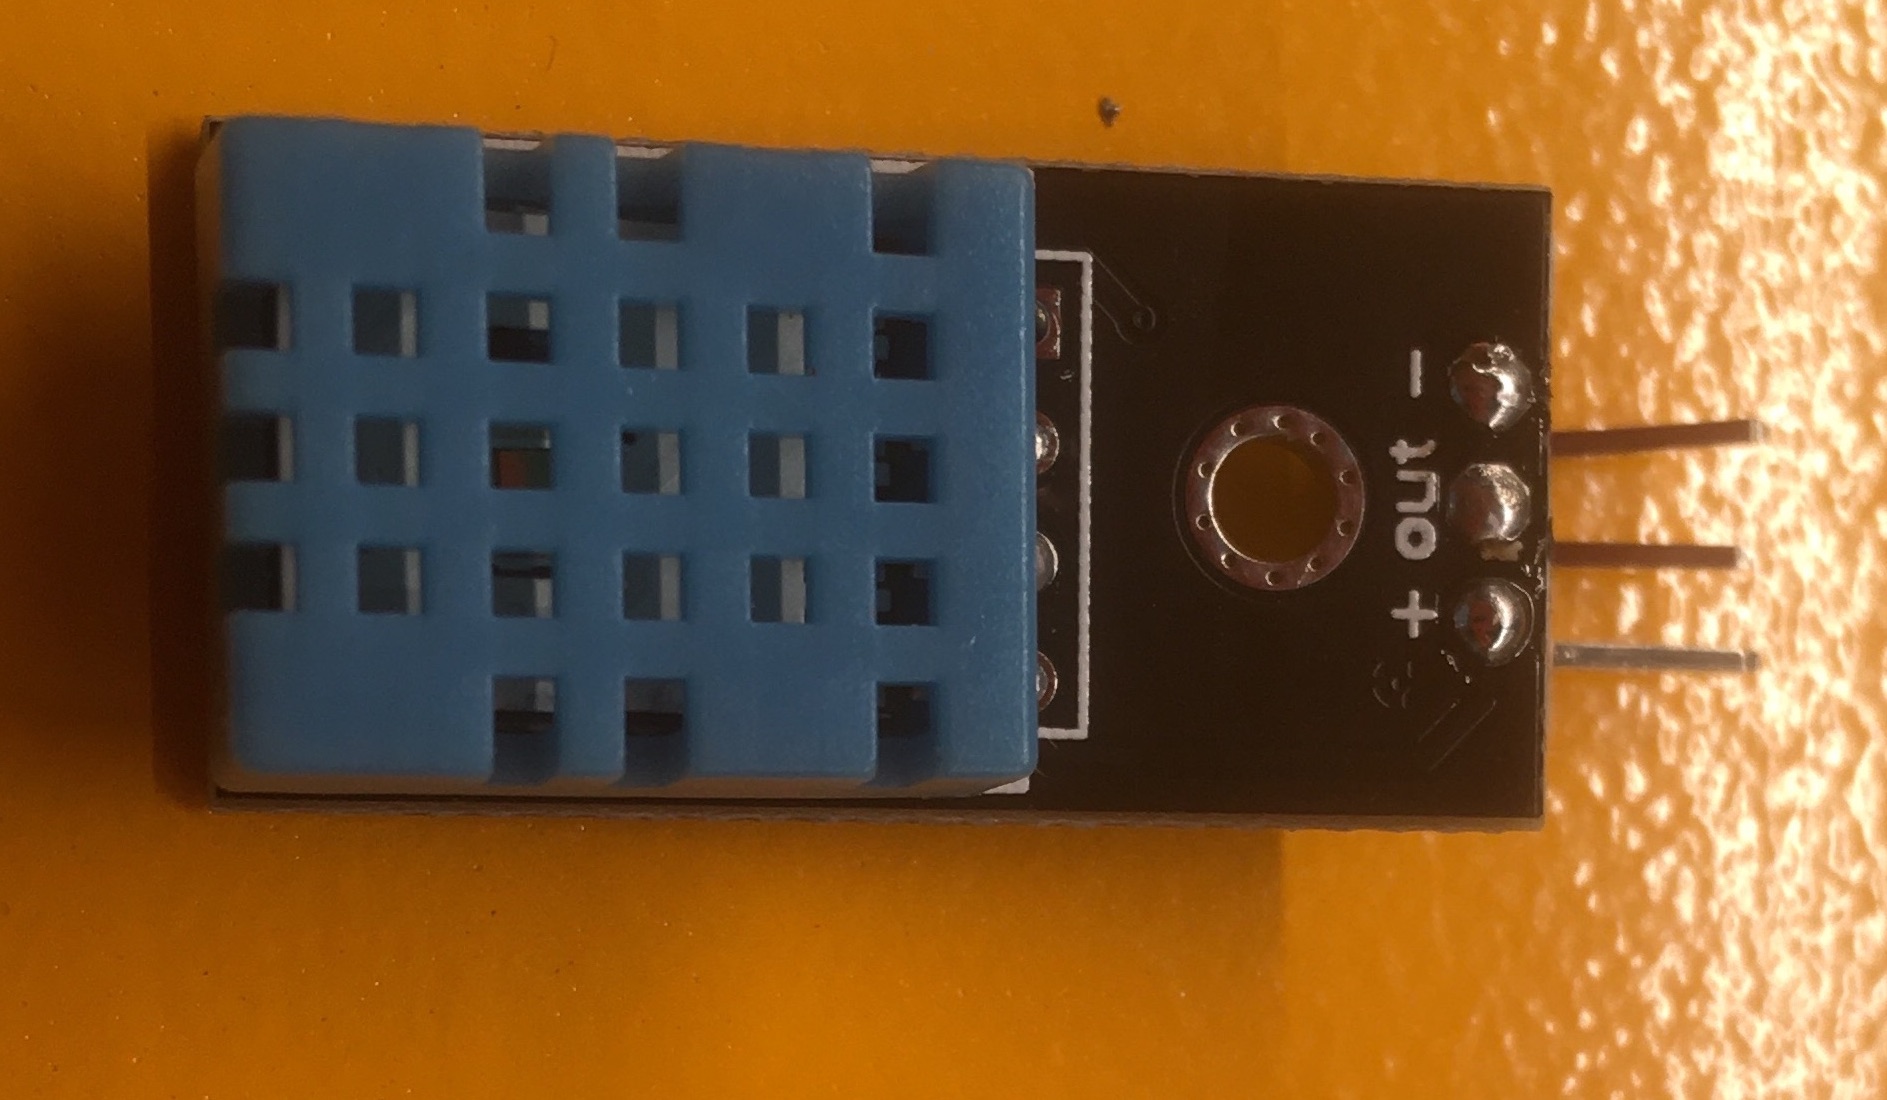 Humidity Sensor with Pins Resoldered